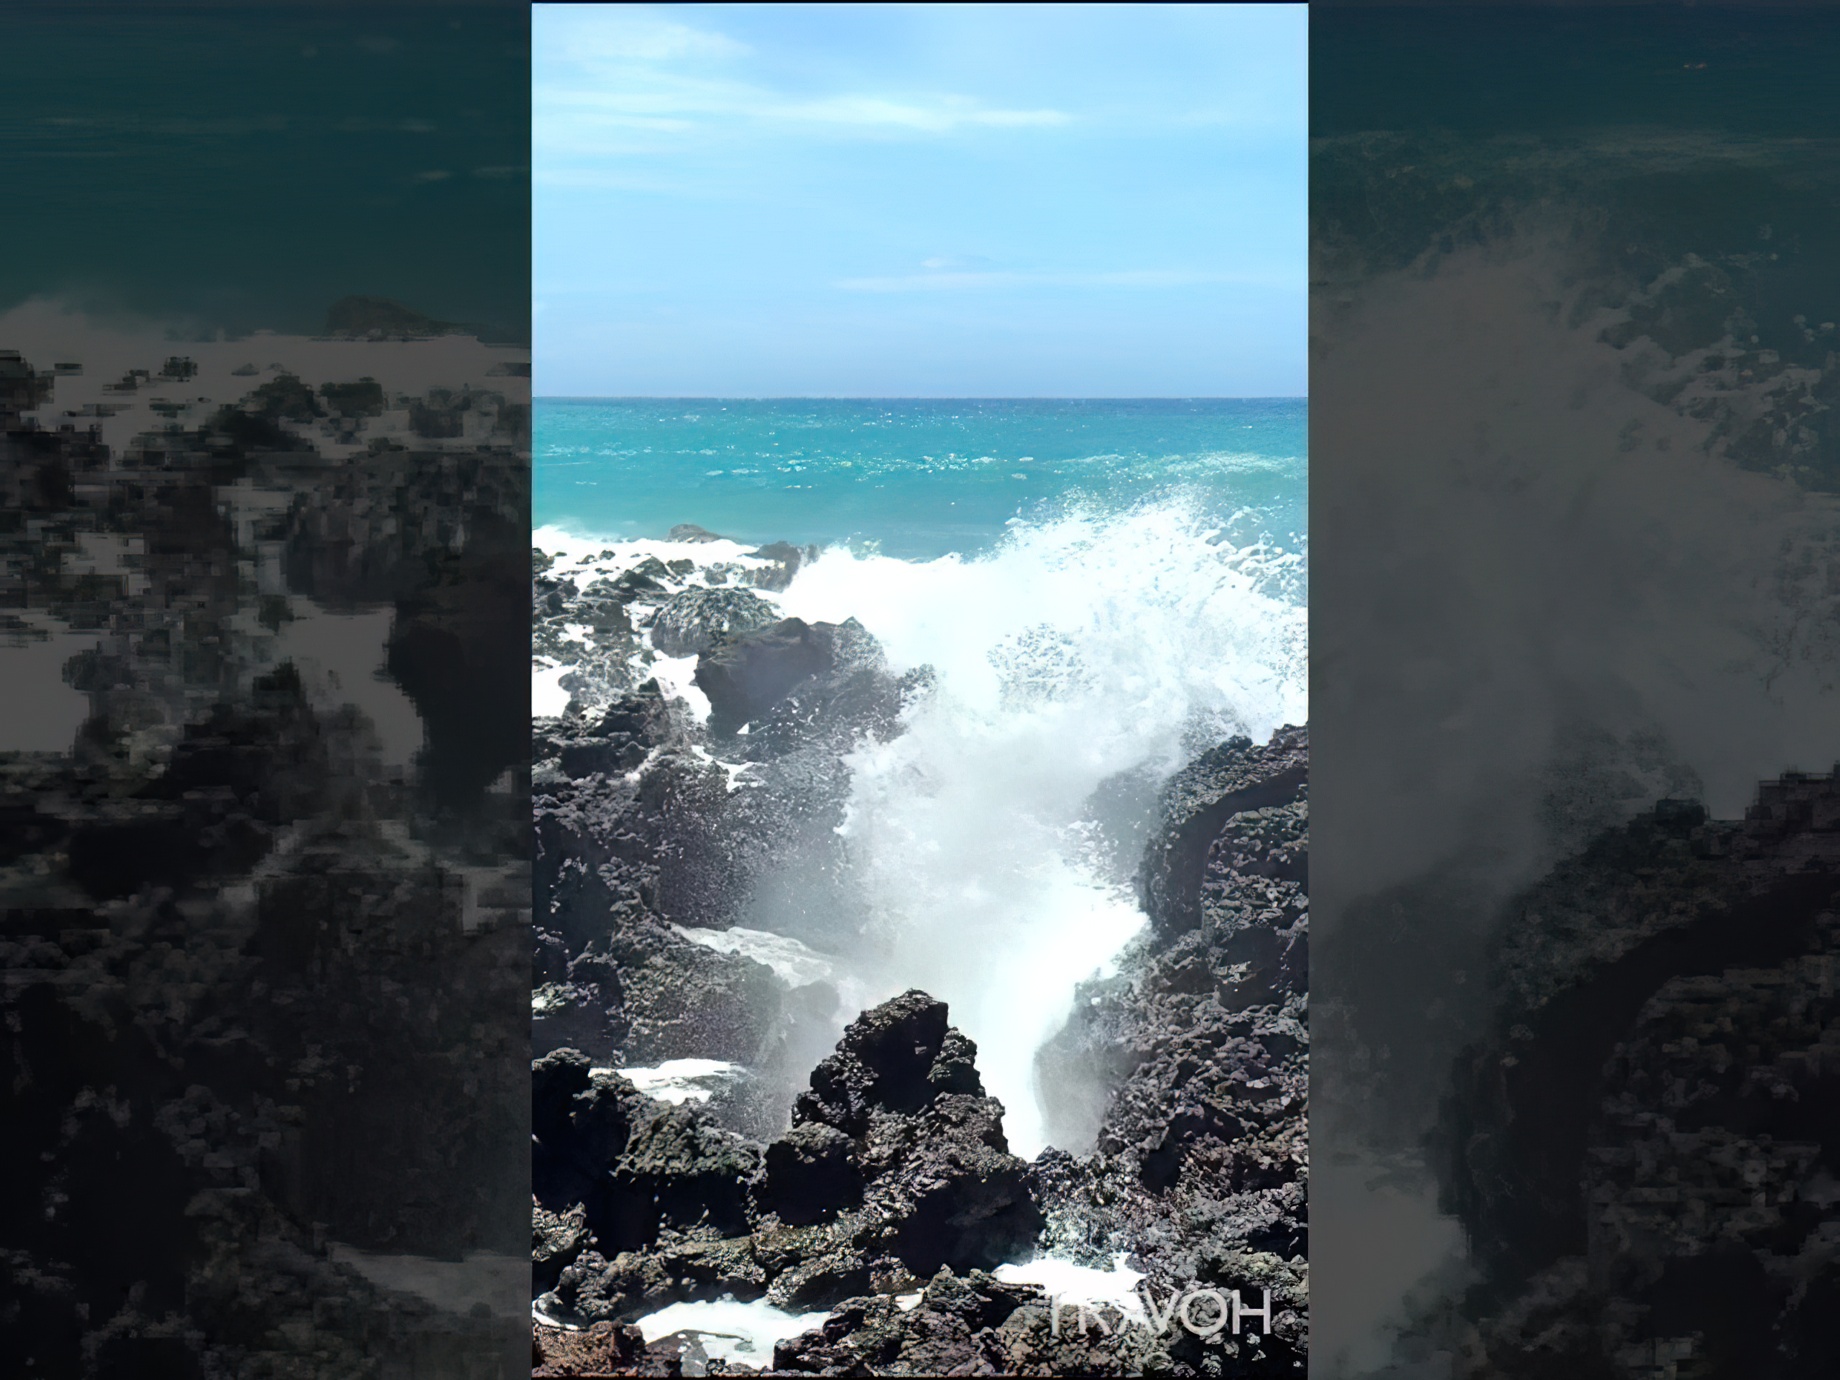 Maui Ocean Waves Sea Sounds - Relaxing Tropical Meditation - Hawaii USA 4K Video Travel #shorts